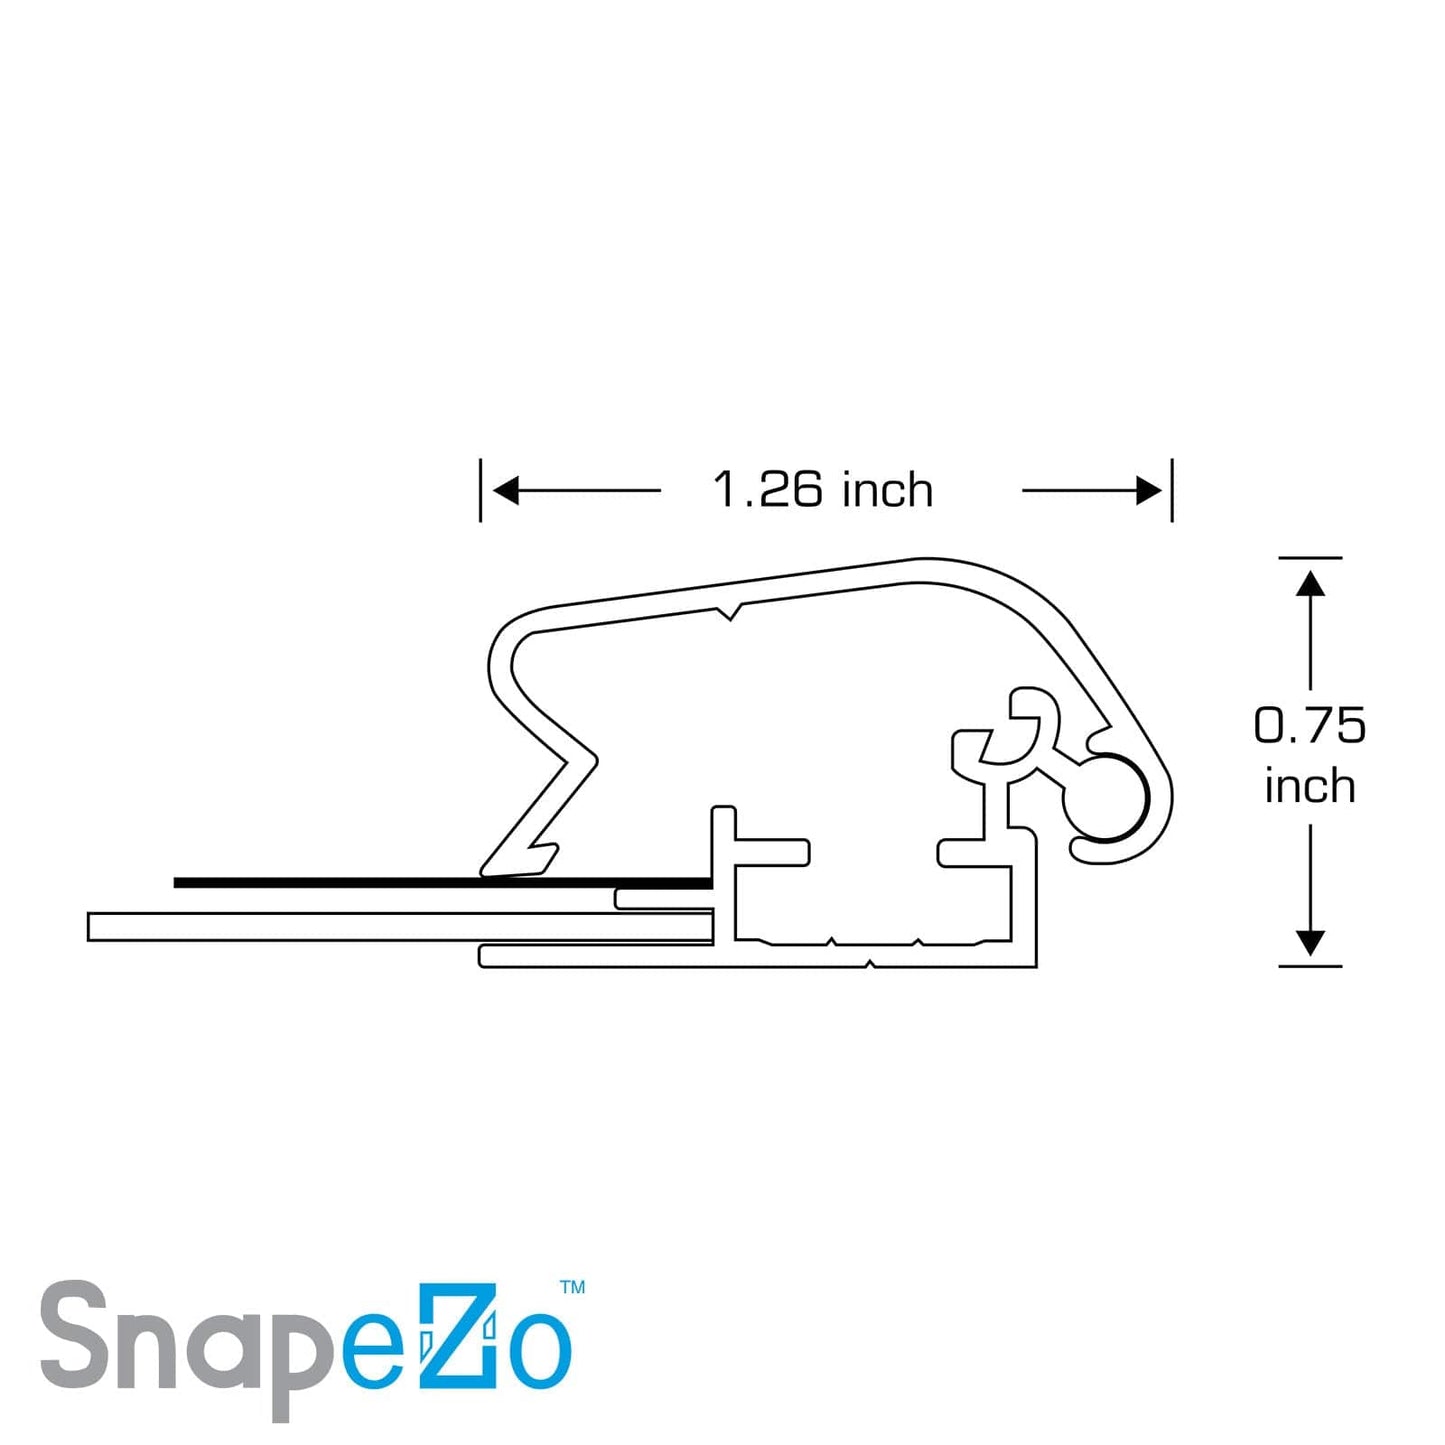 27x40 Green SnapeZo® Snap Frame - 1.25" Profile - Snap Frames Direct